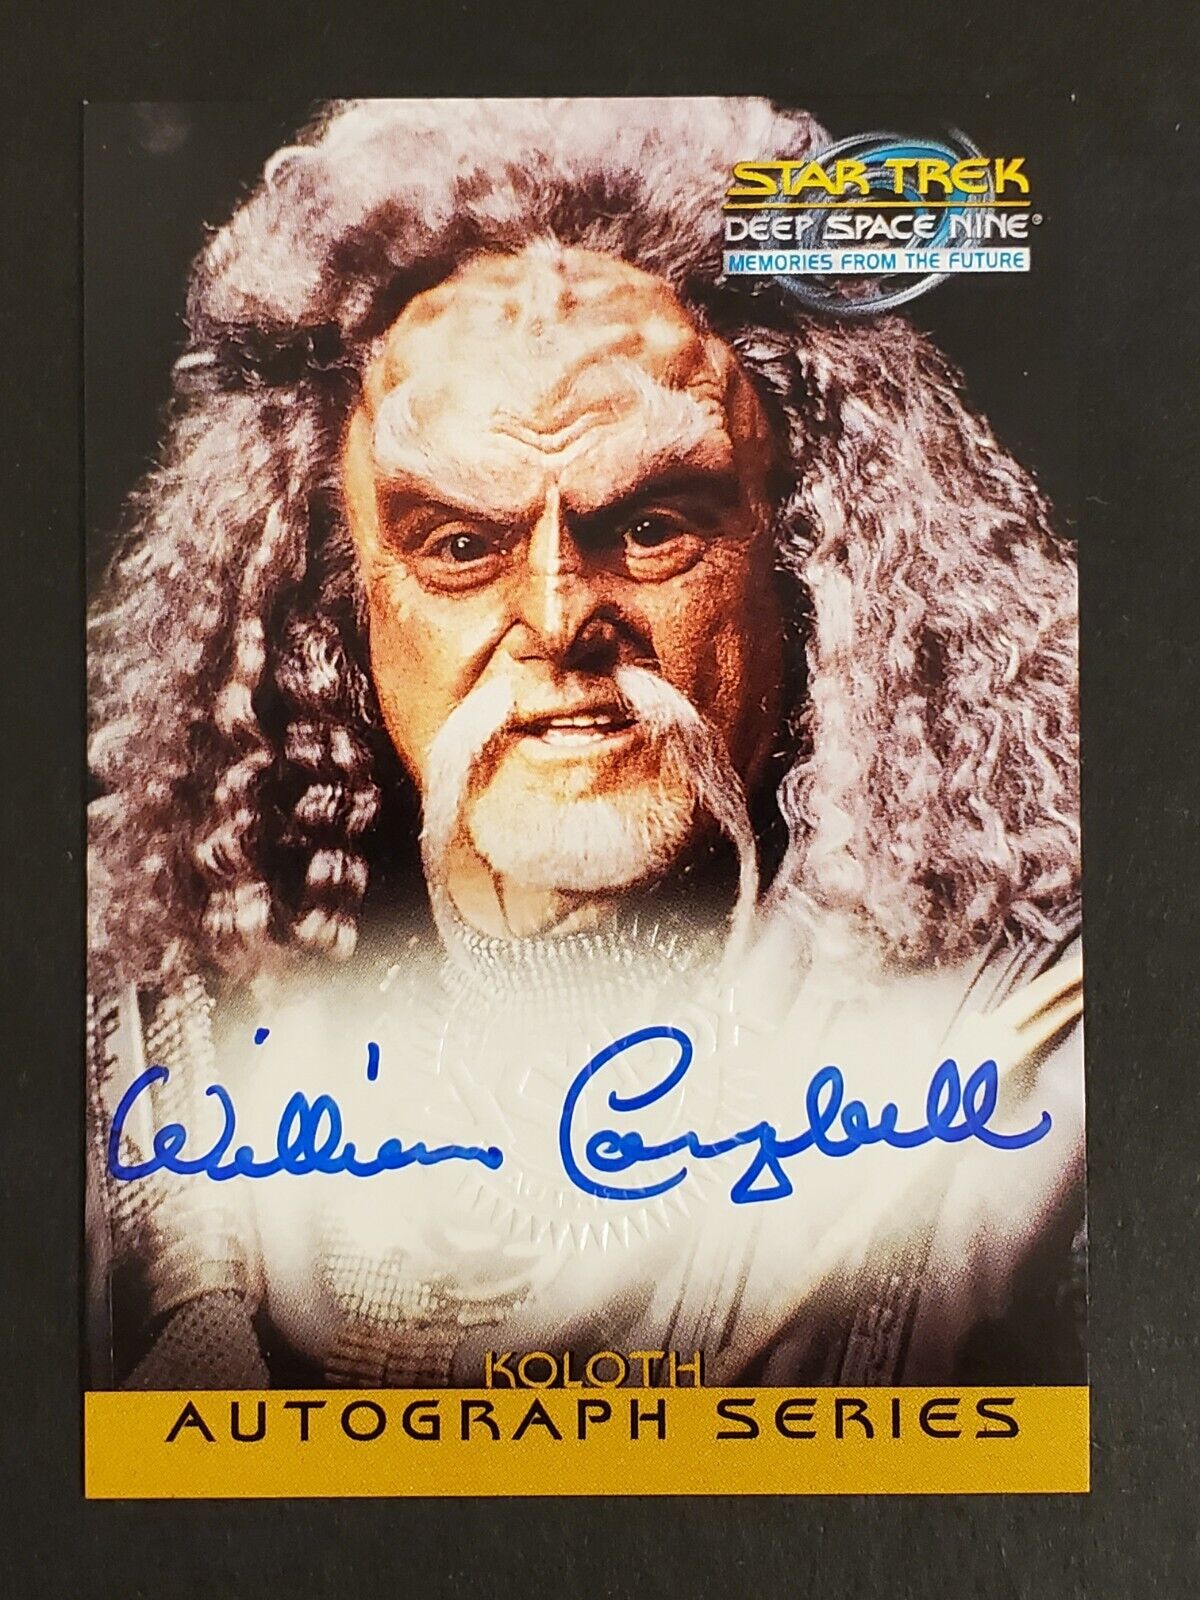 Star Trek Deep Space Nine MOTF A10 Autograph Card NM William Campbell as Koloth